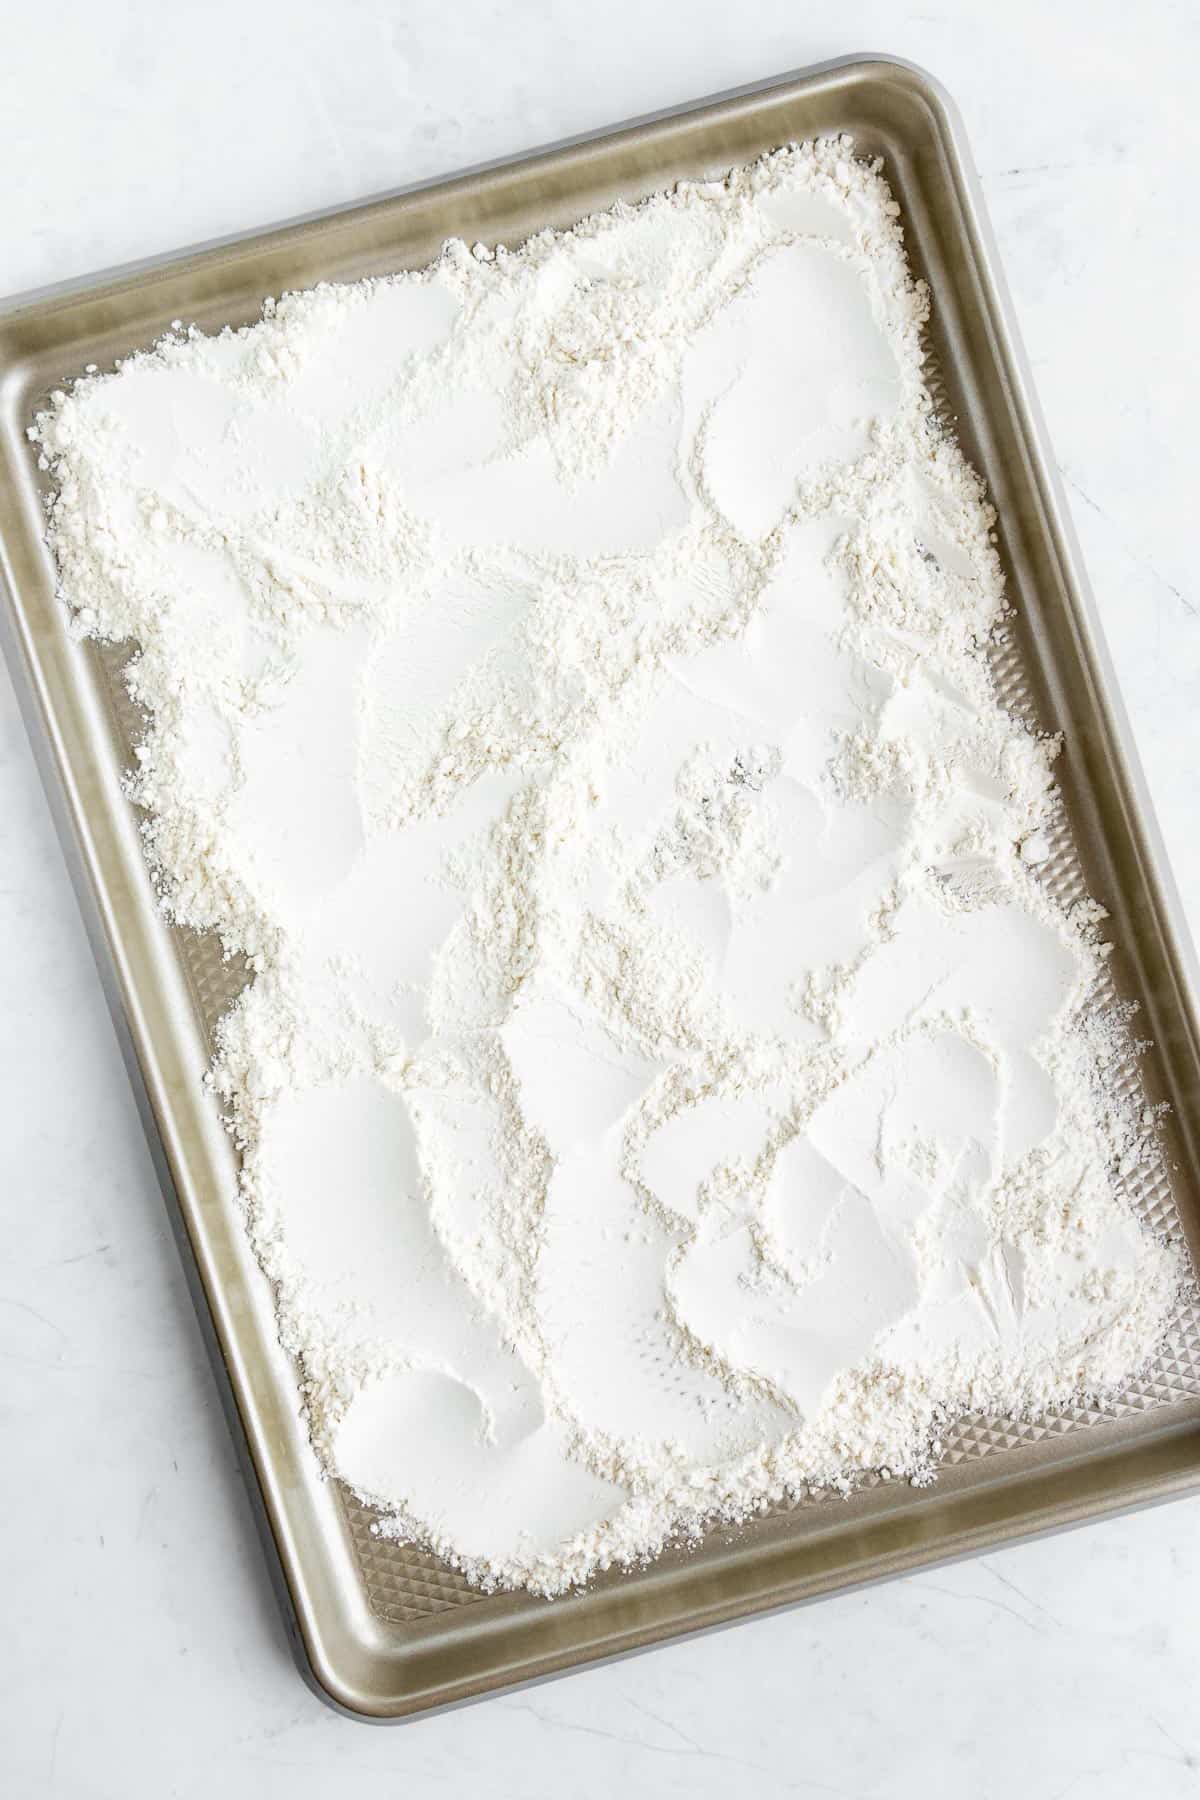 all purpose flour spread on a baking sheet